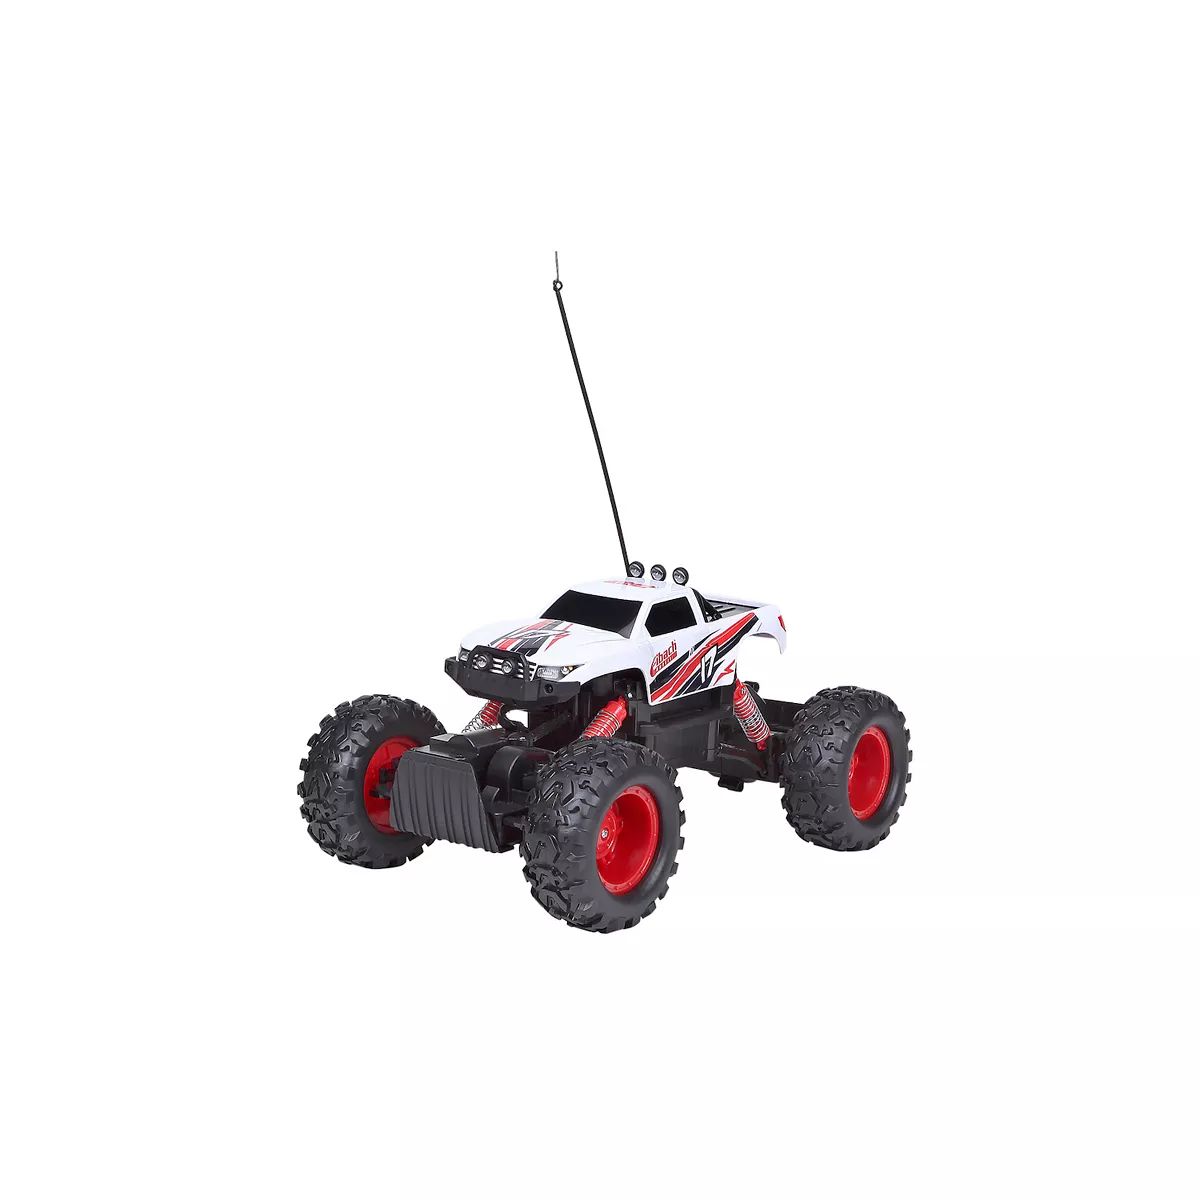 Maisto Rock Crawler Remote Control Toy Car | Kohl's